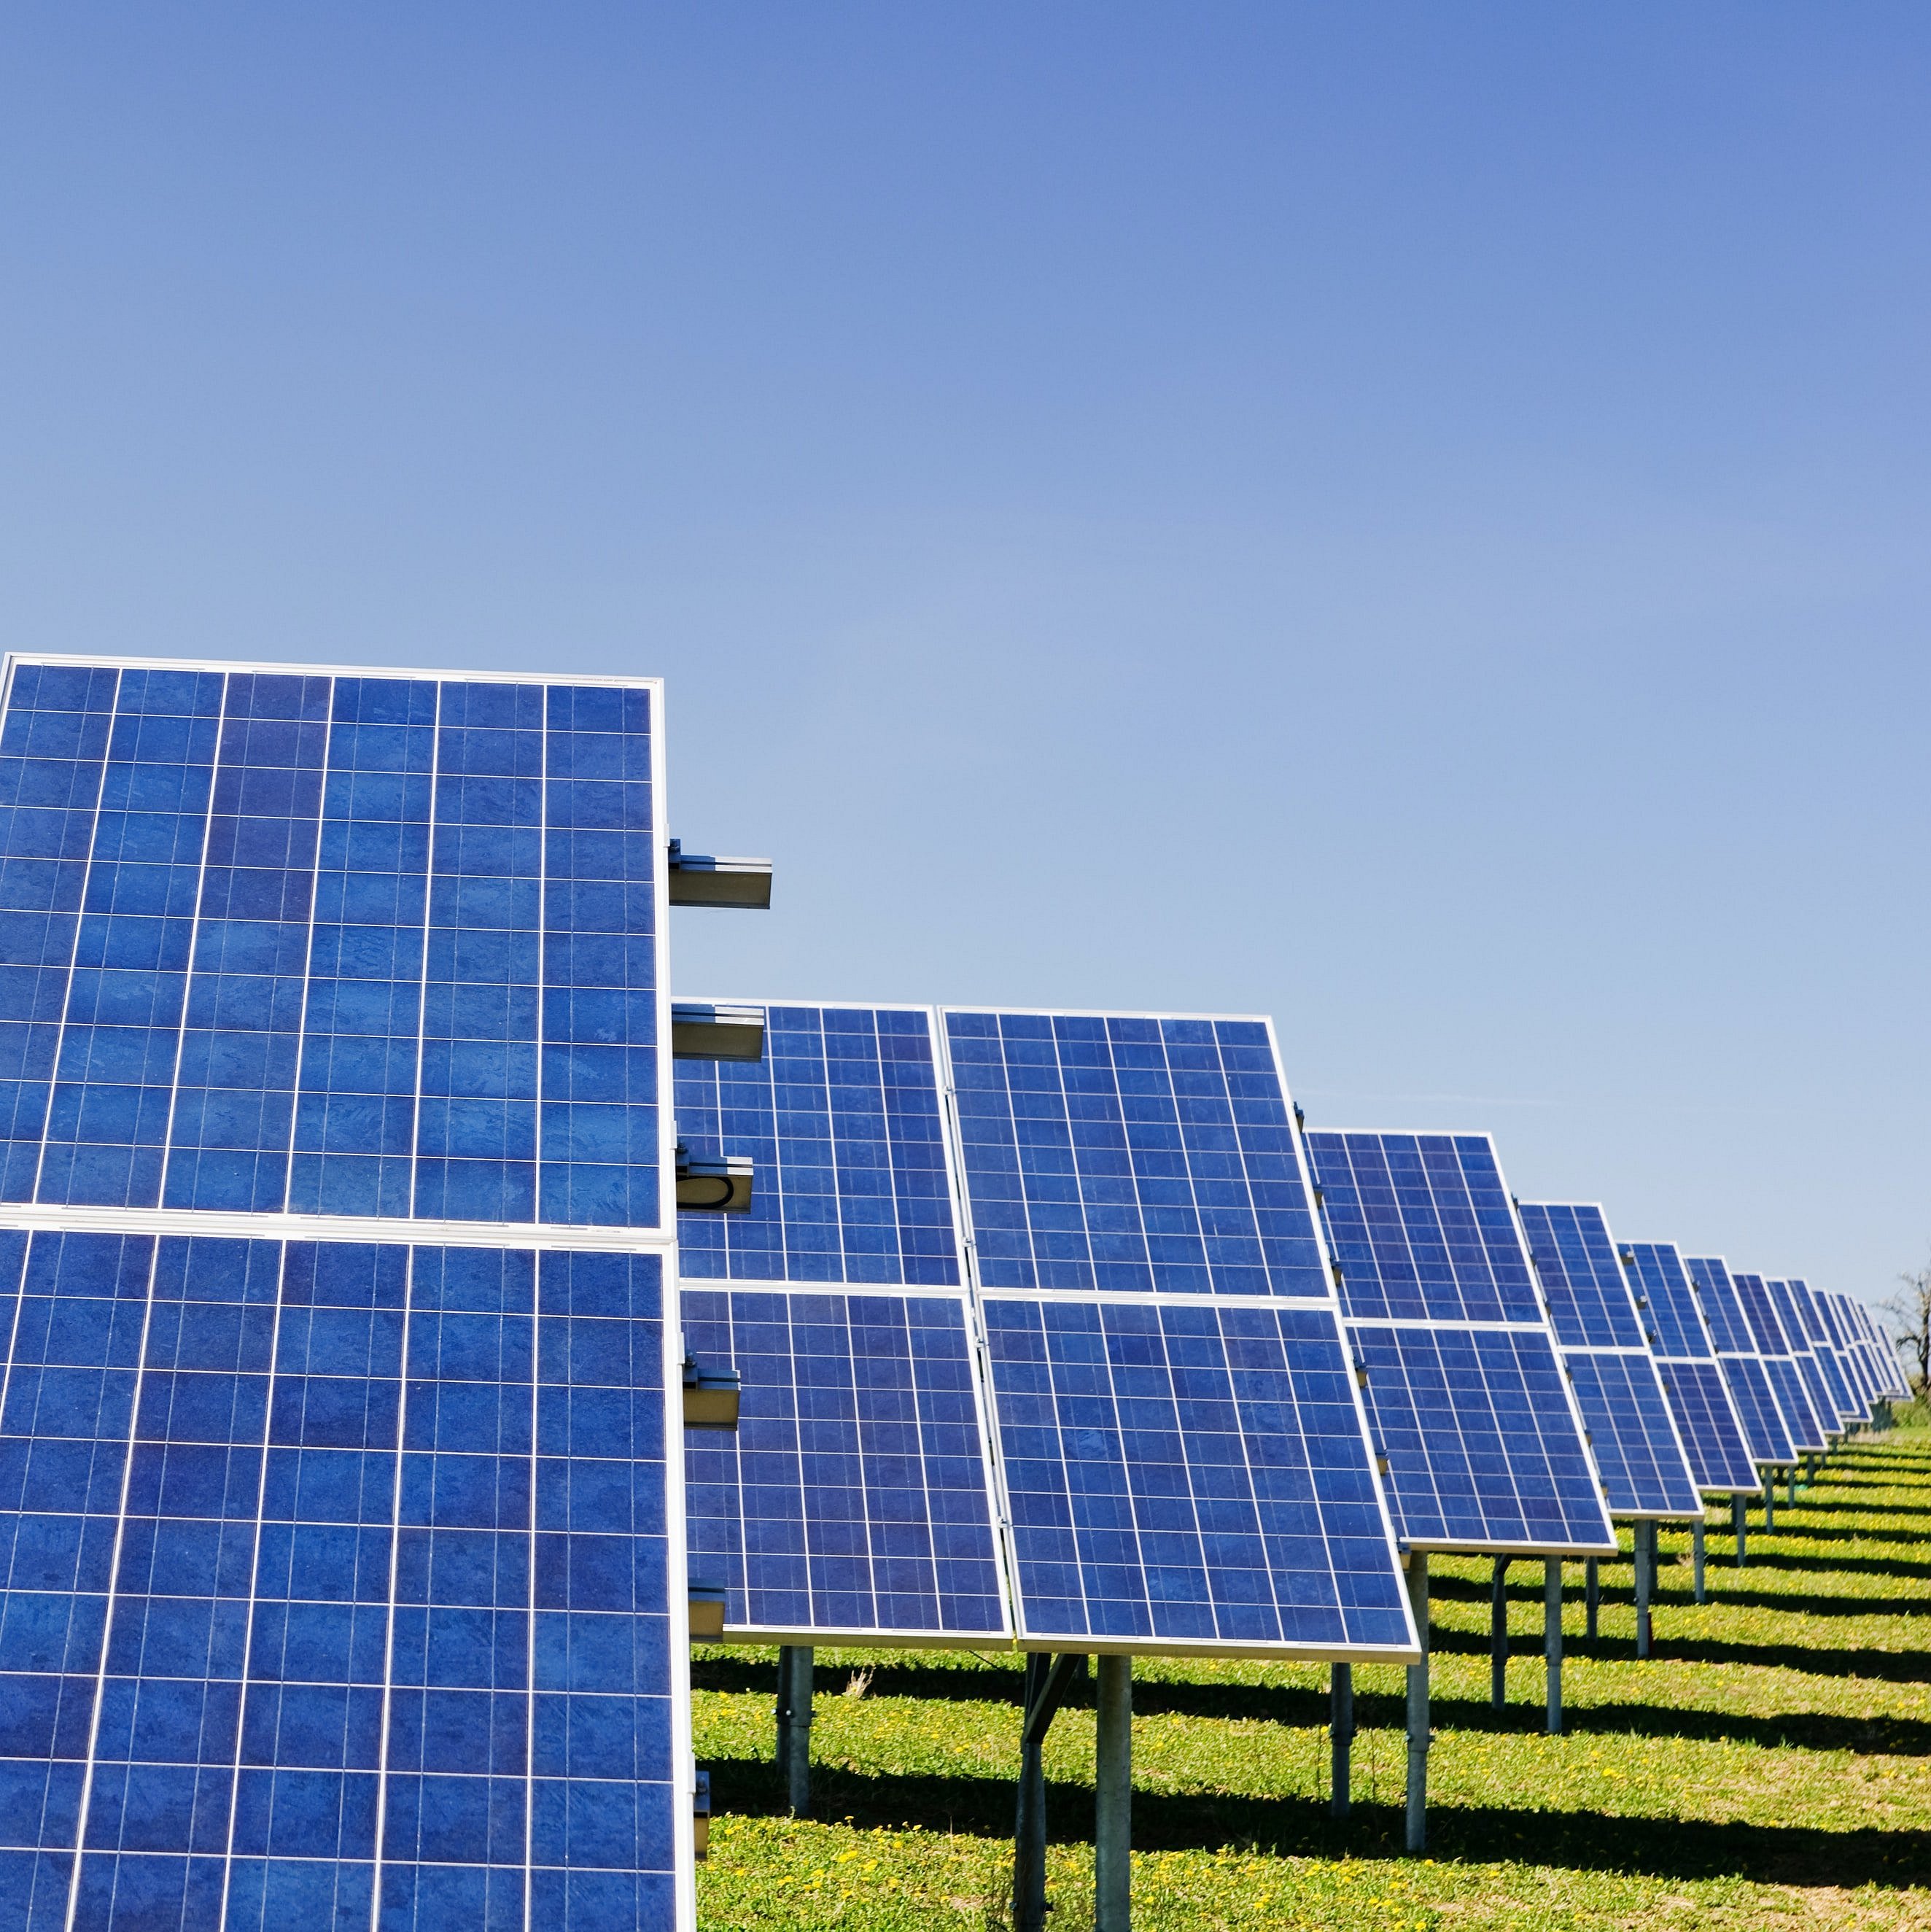 Abgebilet are many solar panels that gain renewable energy.